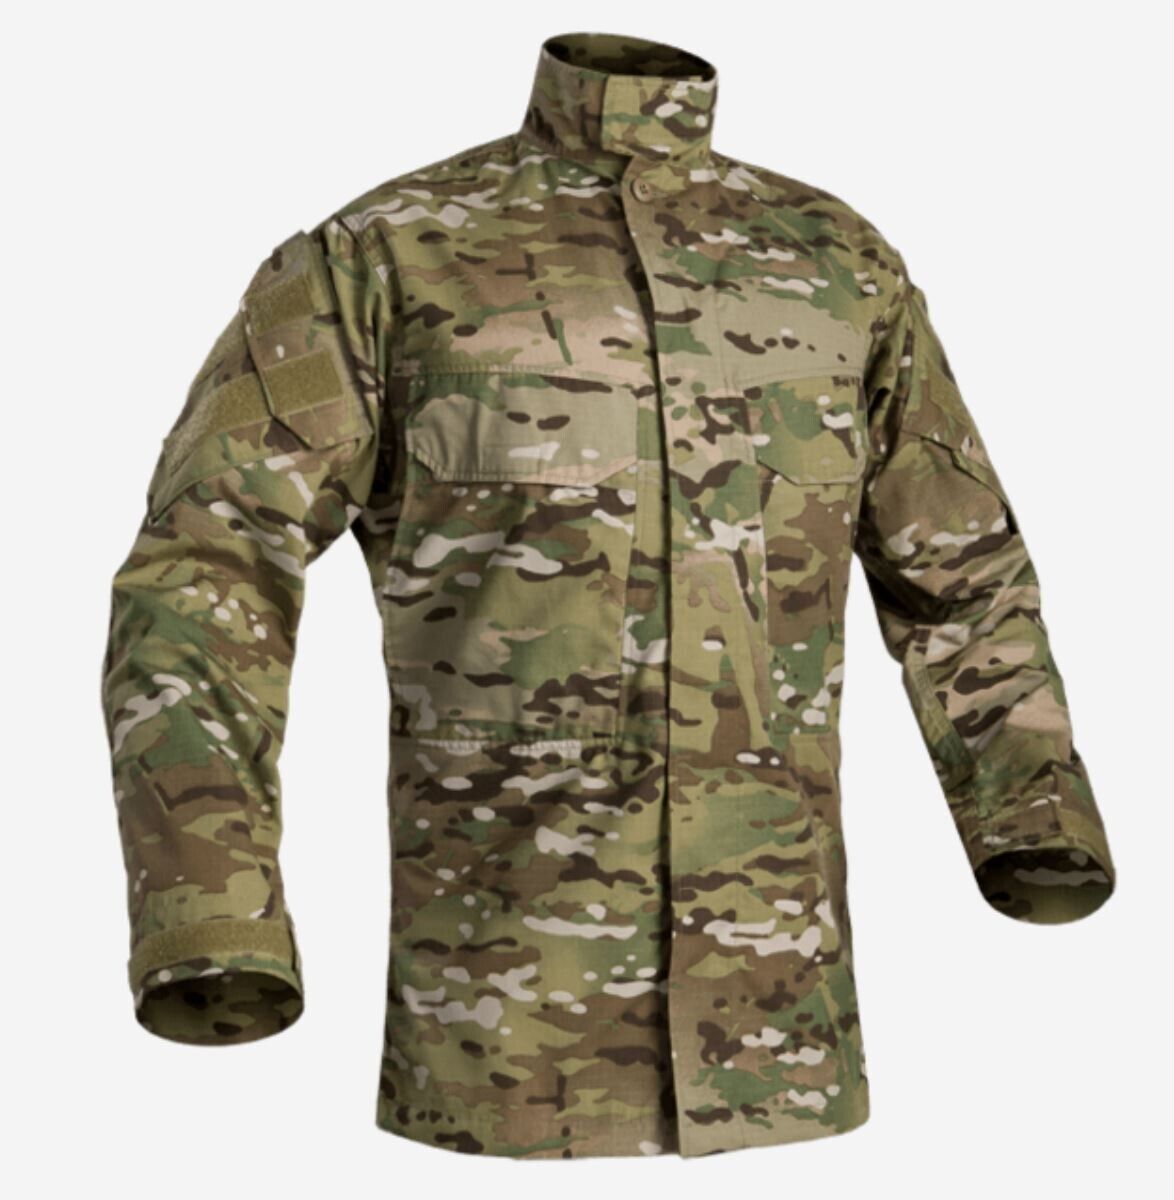 Crye Precision APR-FSE-02 G3 Field Shirt, Multicam, X-Large Short, NIP